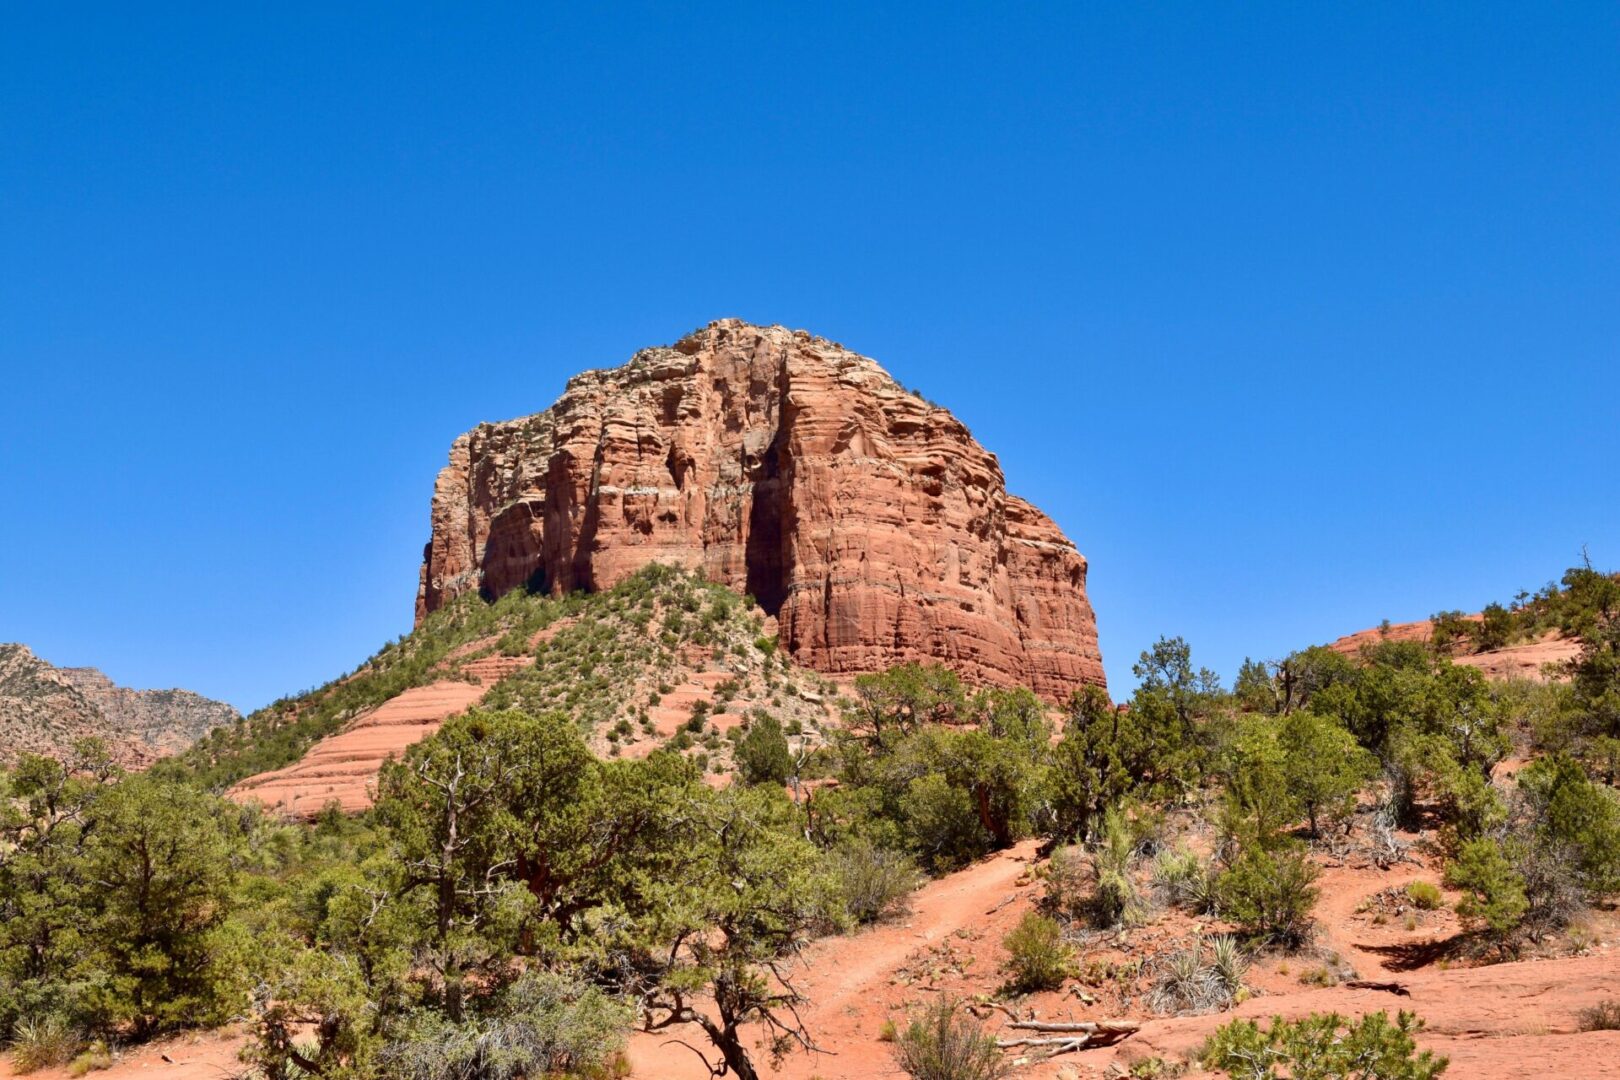 The Boynton Canyon sedona II hill area in Arizona